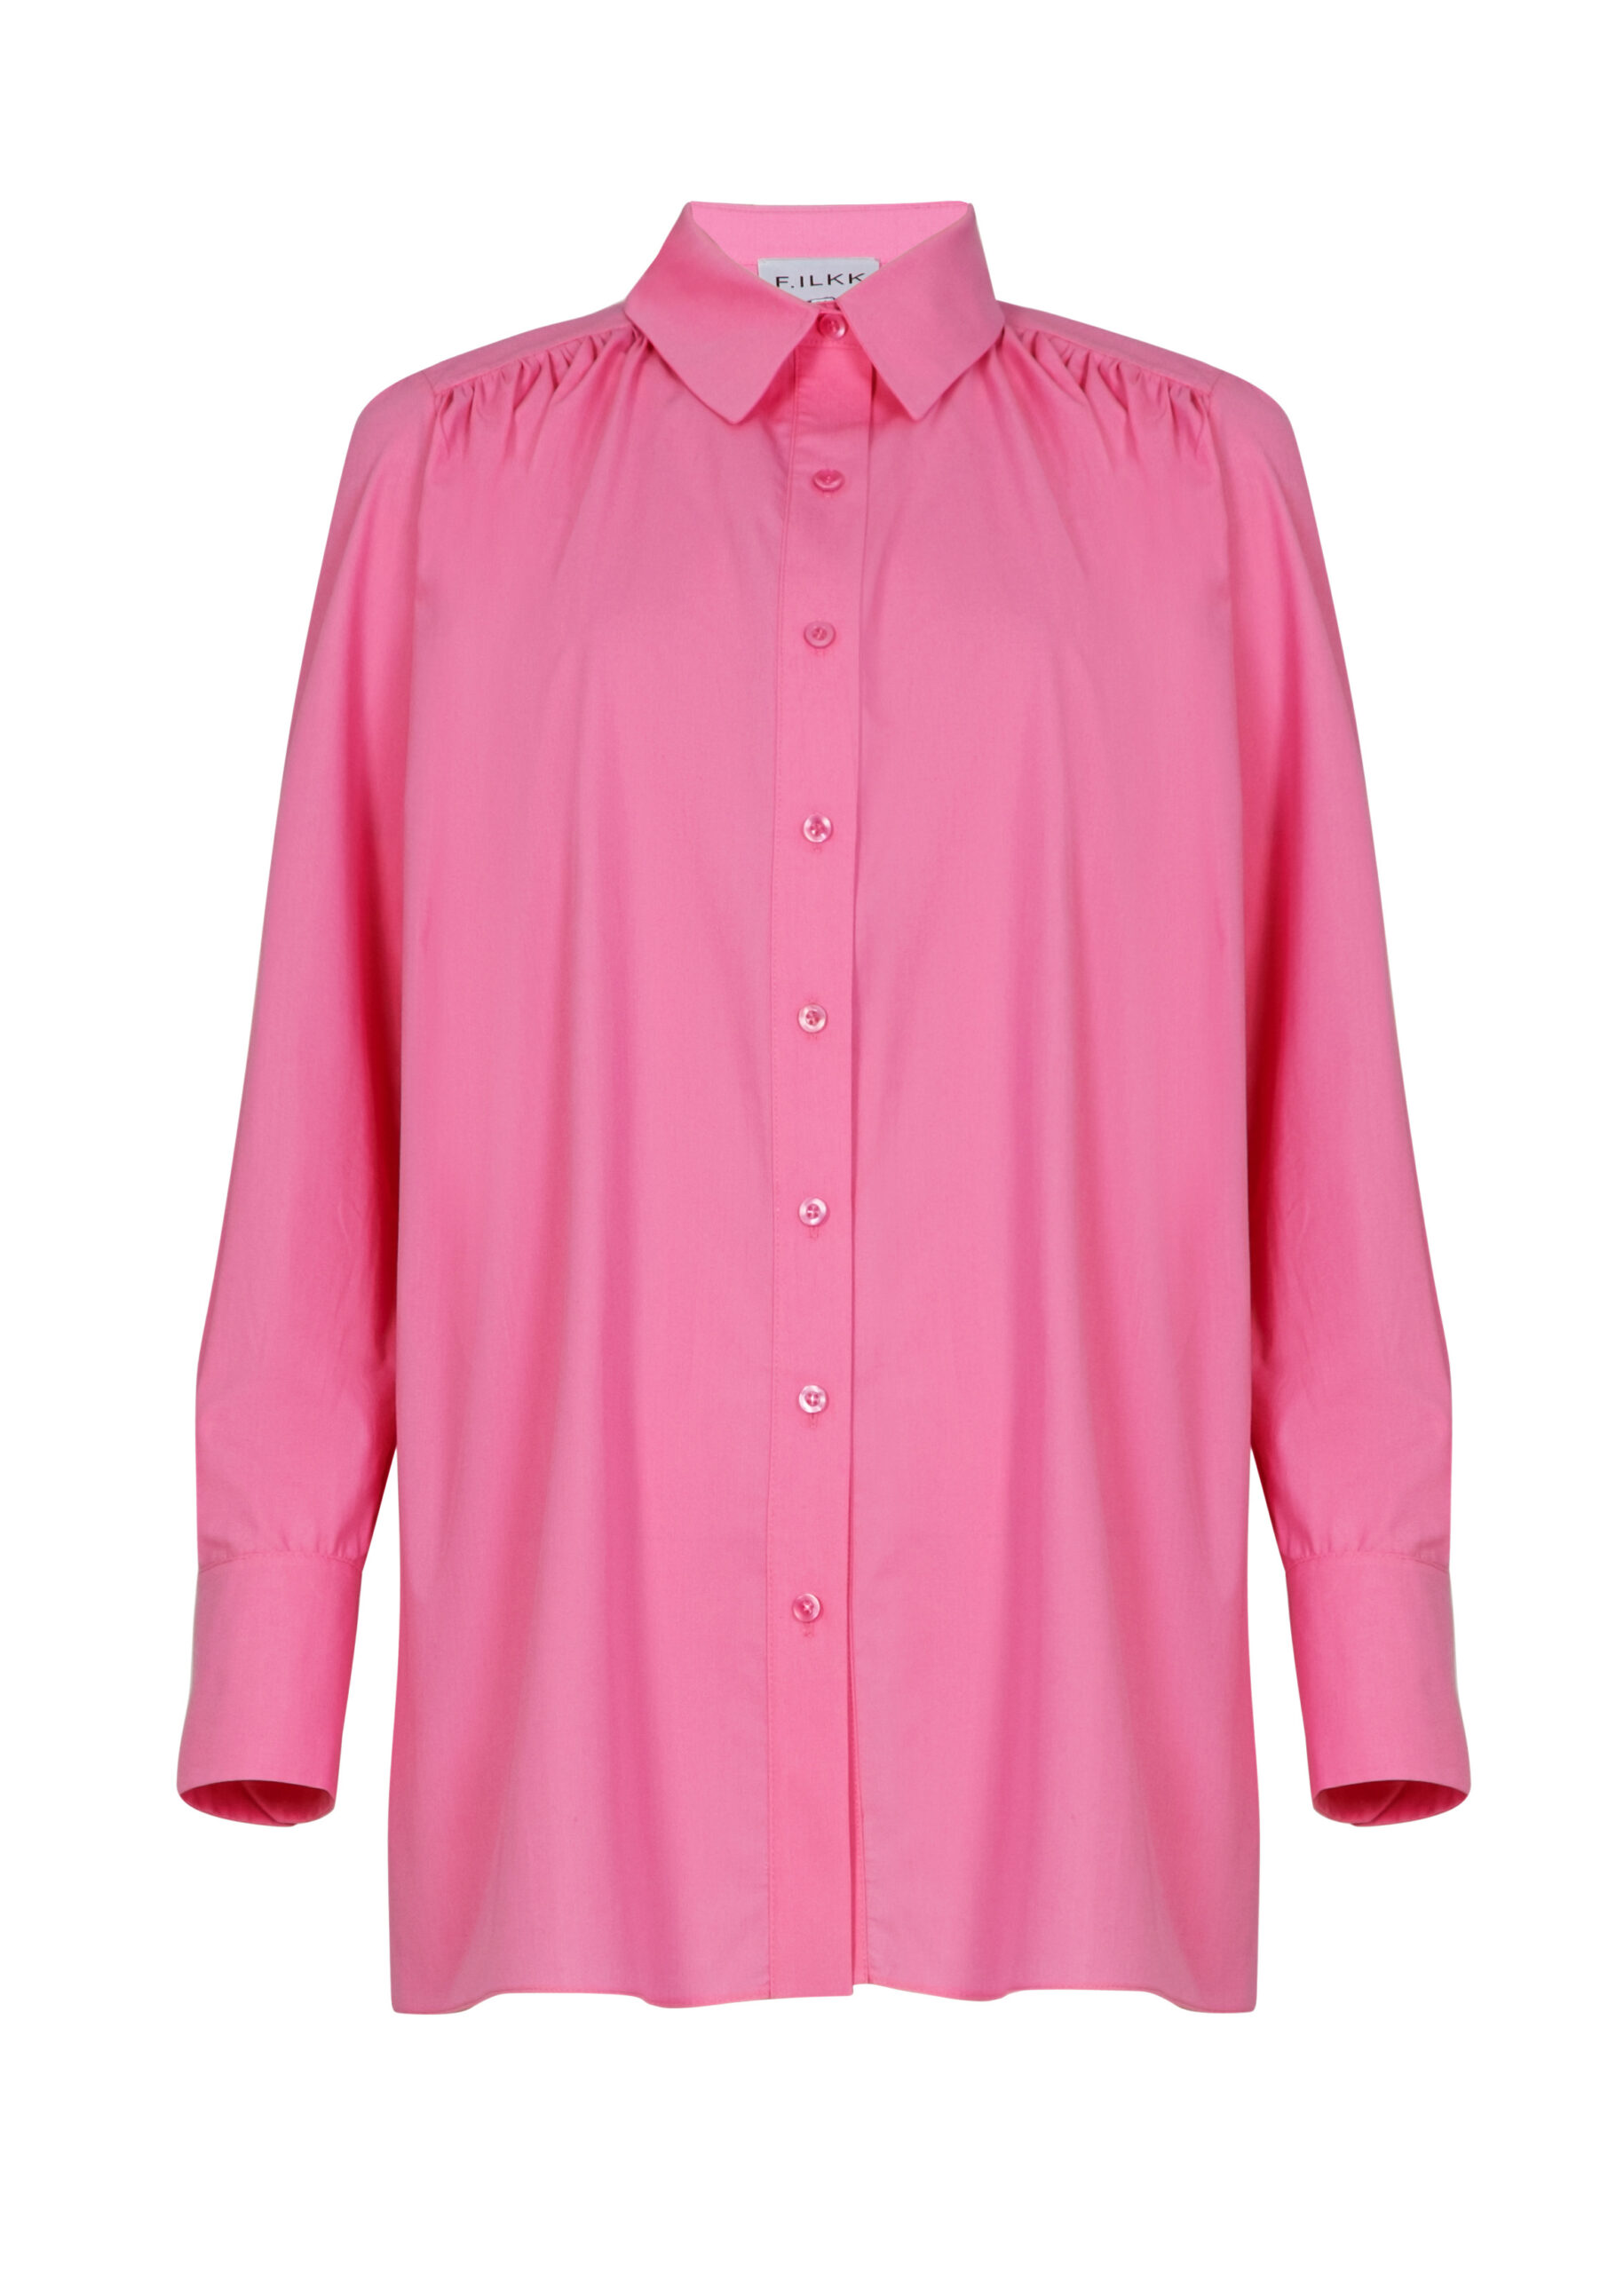 Pink Oversize Shirt - F.ILKK